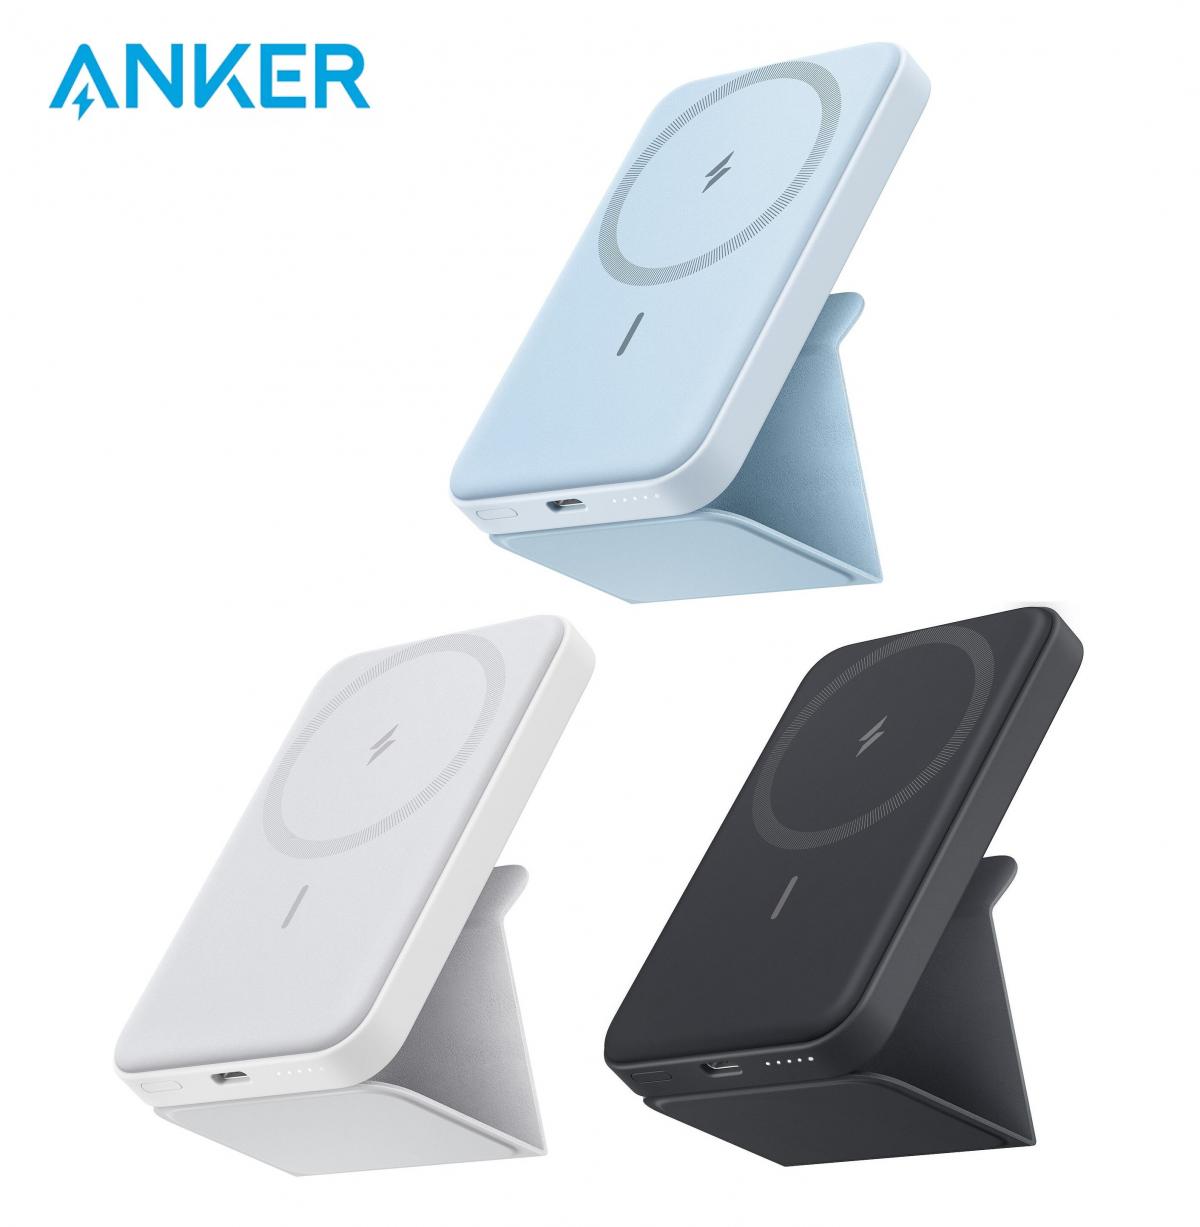 Anker - MagGo 622 5000mAh MagSafe磁充無線充電行動電源｜外置電池｜移動電池｜尿袋 A1611